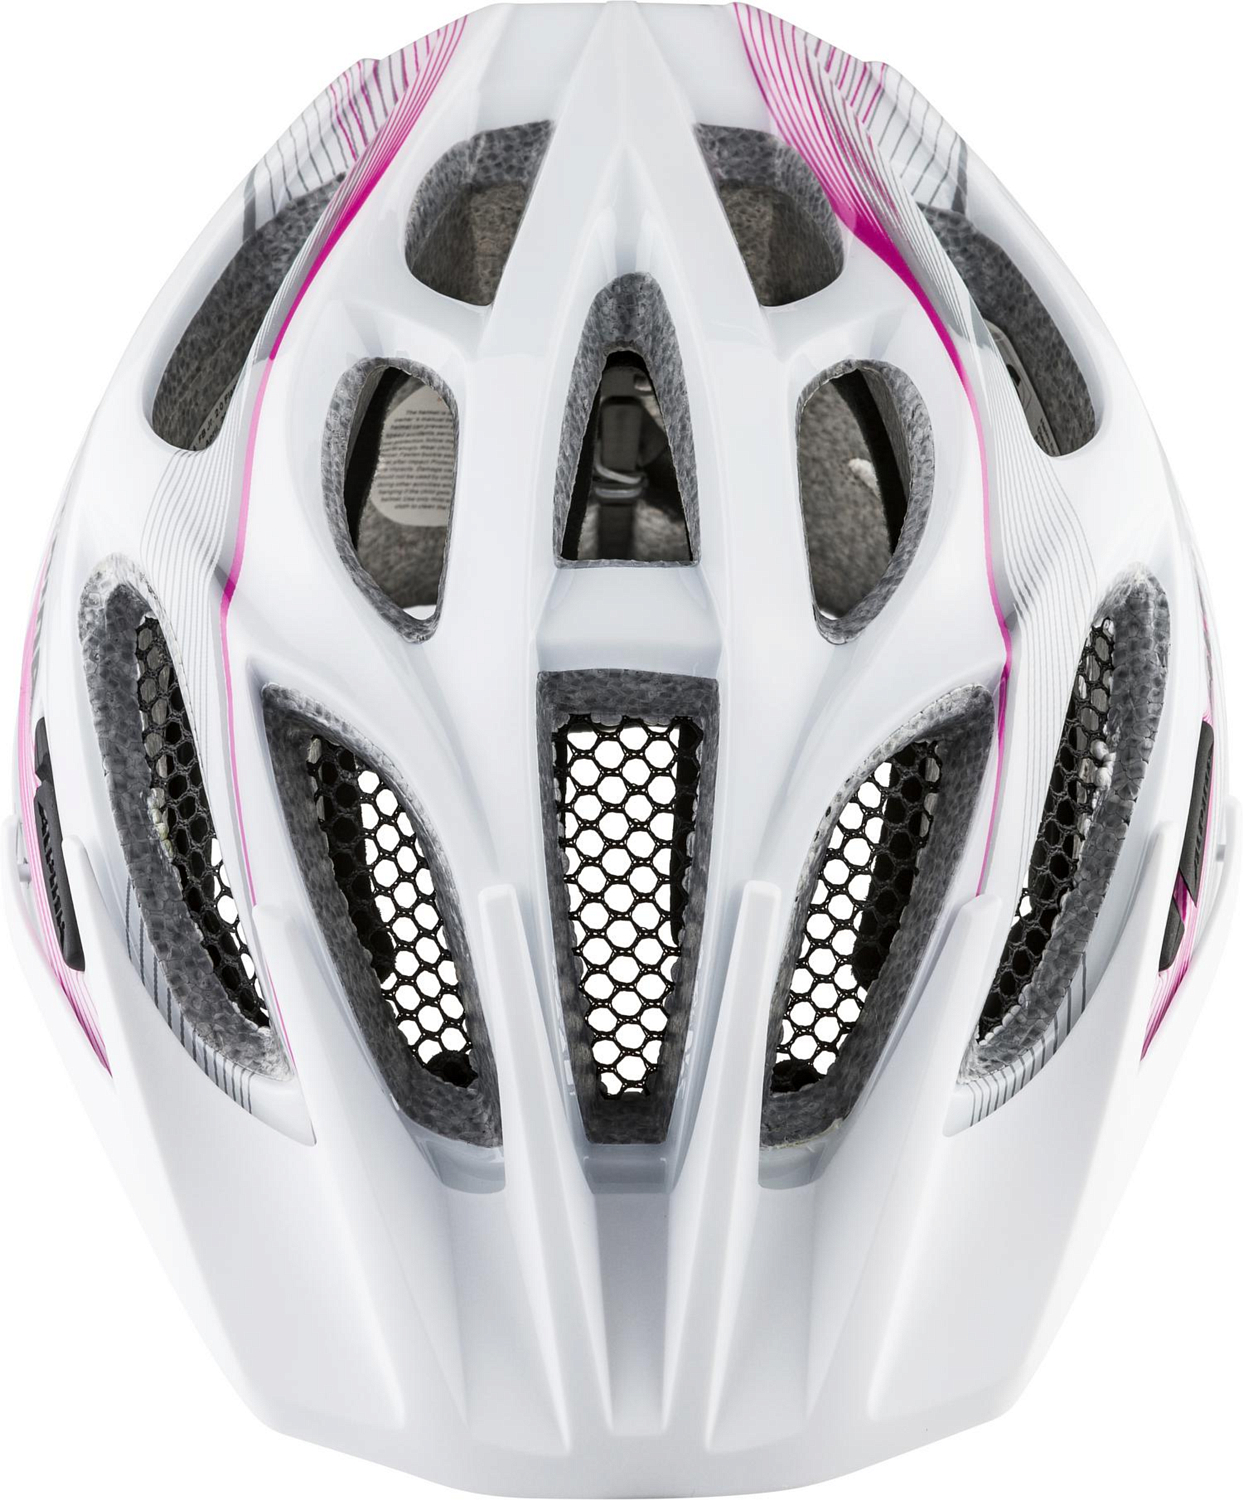 Велошлем Alpina 2020 FB Jr. 2.0 Flash White-Pink-Silver